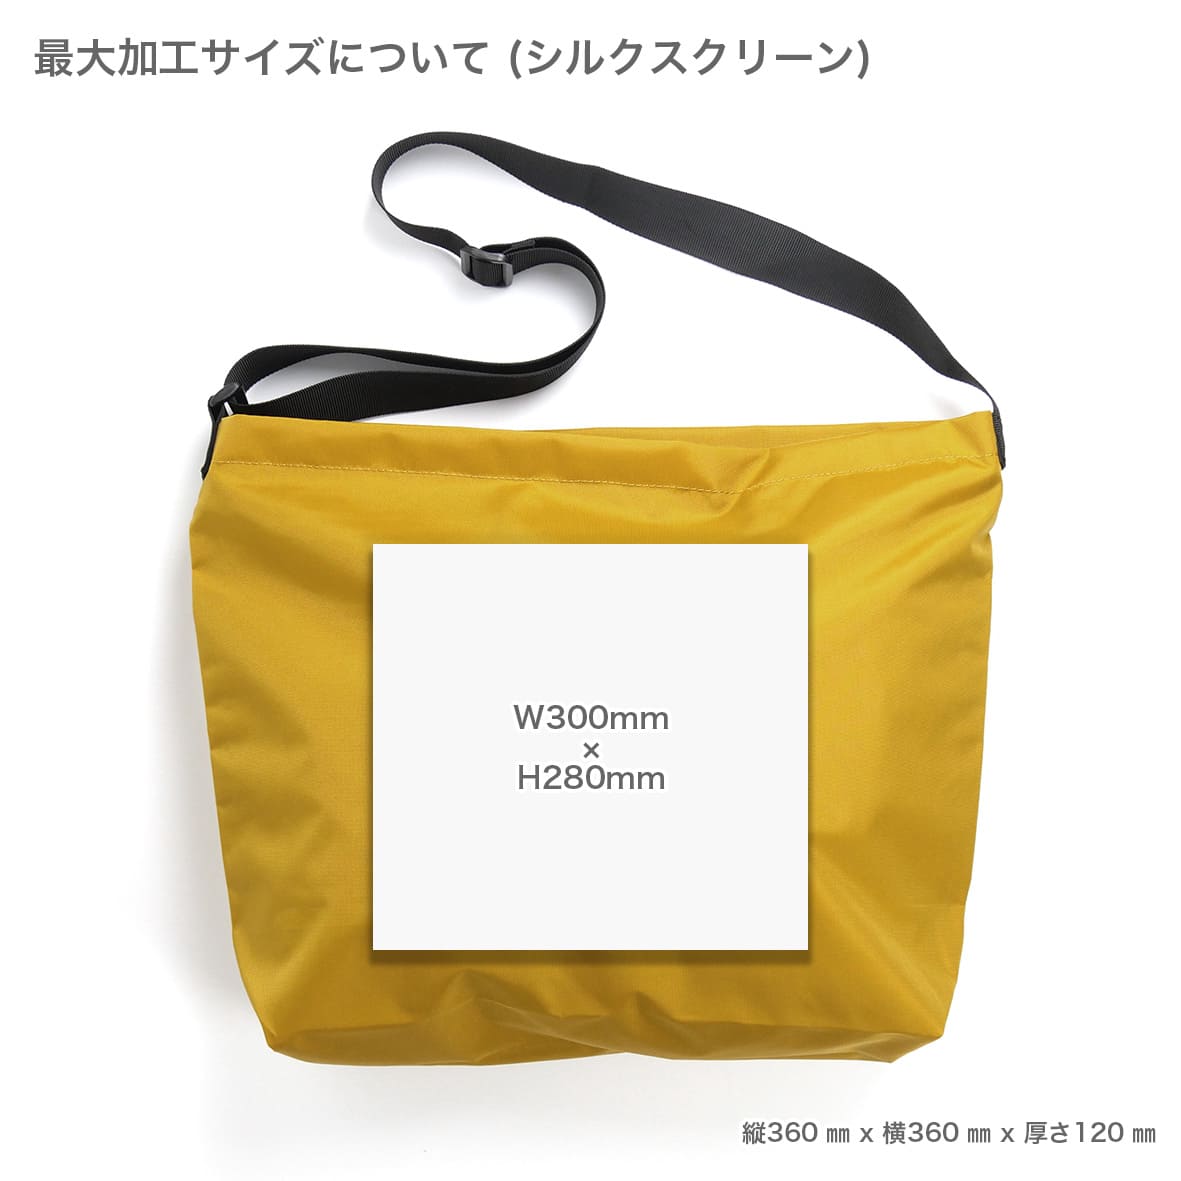 WHEARD ウィアード Shoulder Bag (品番WS1US)